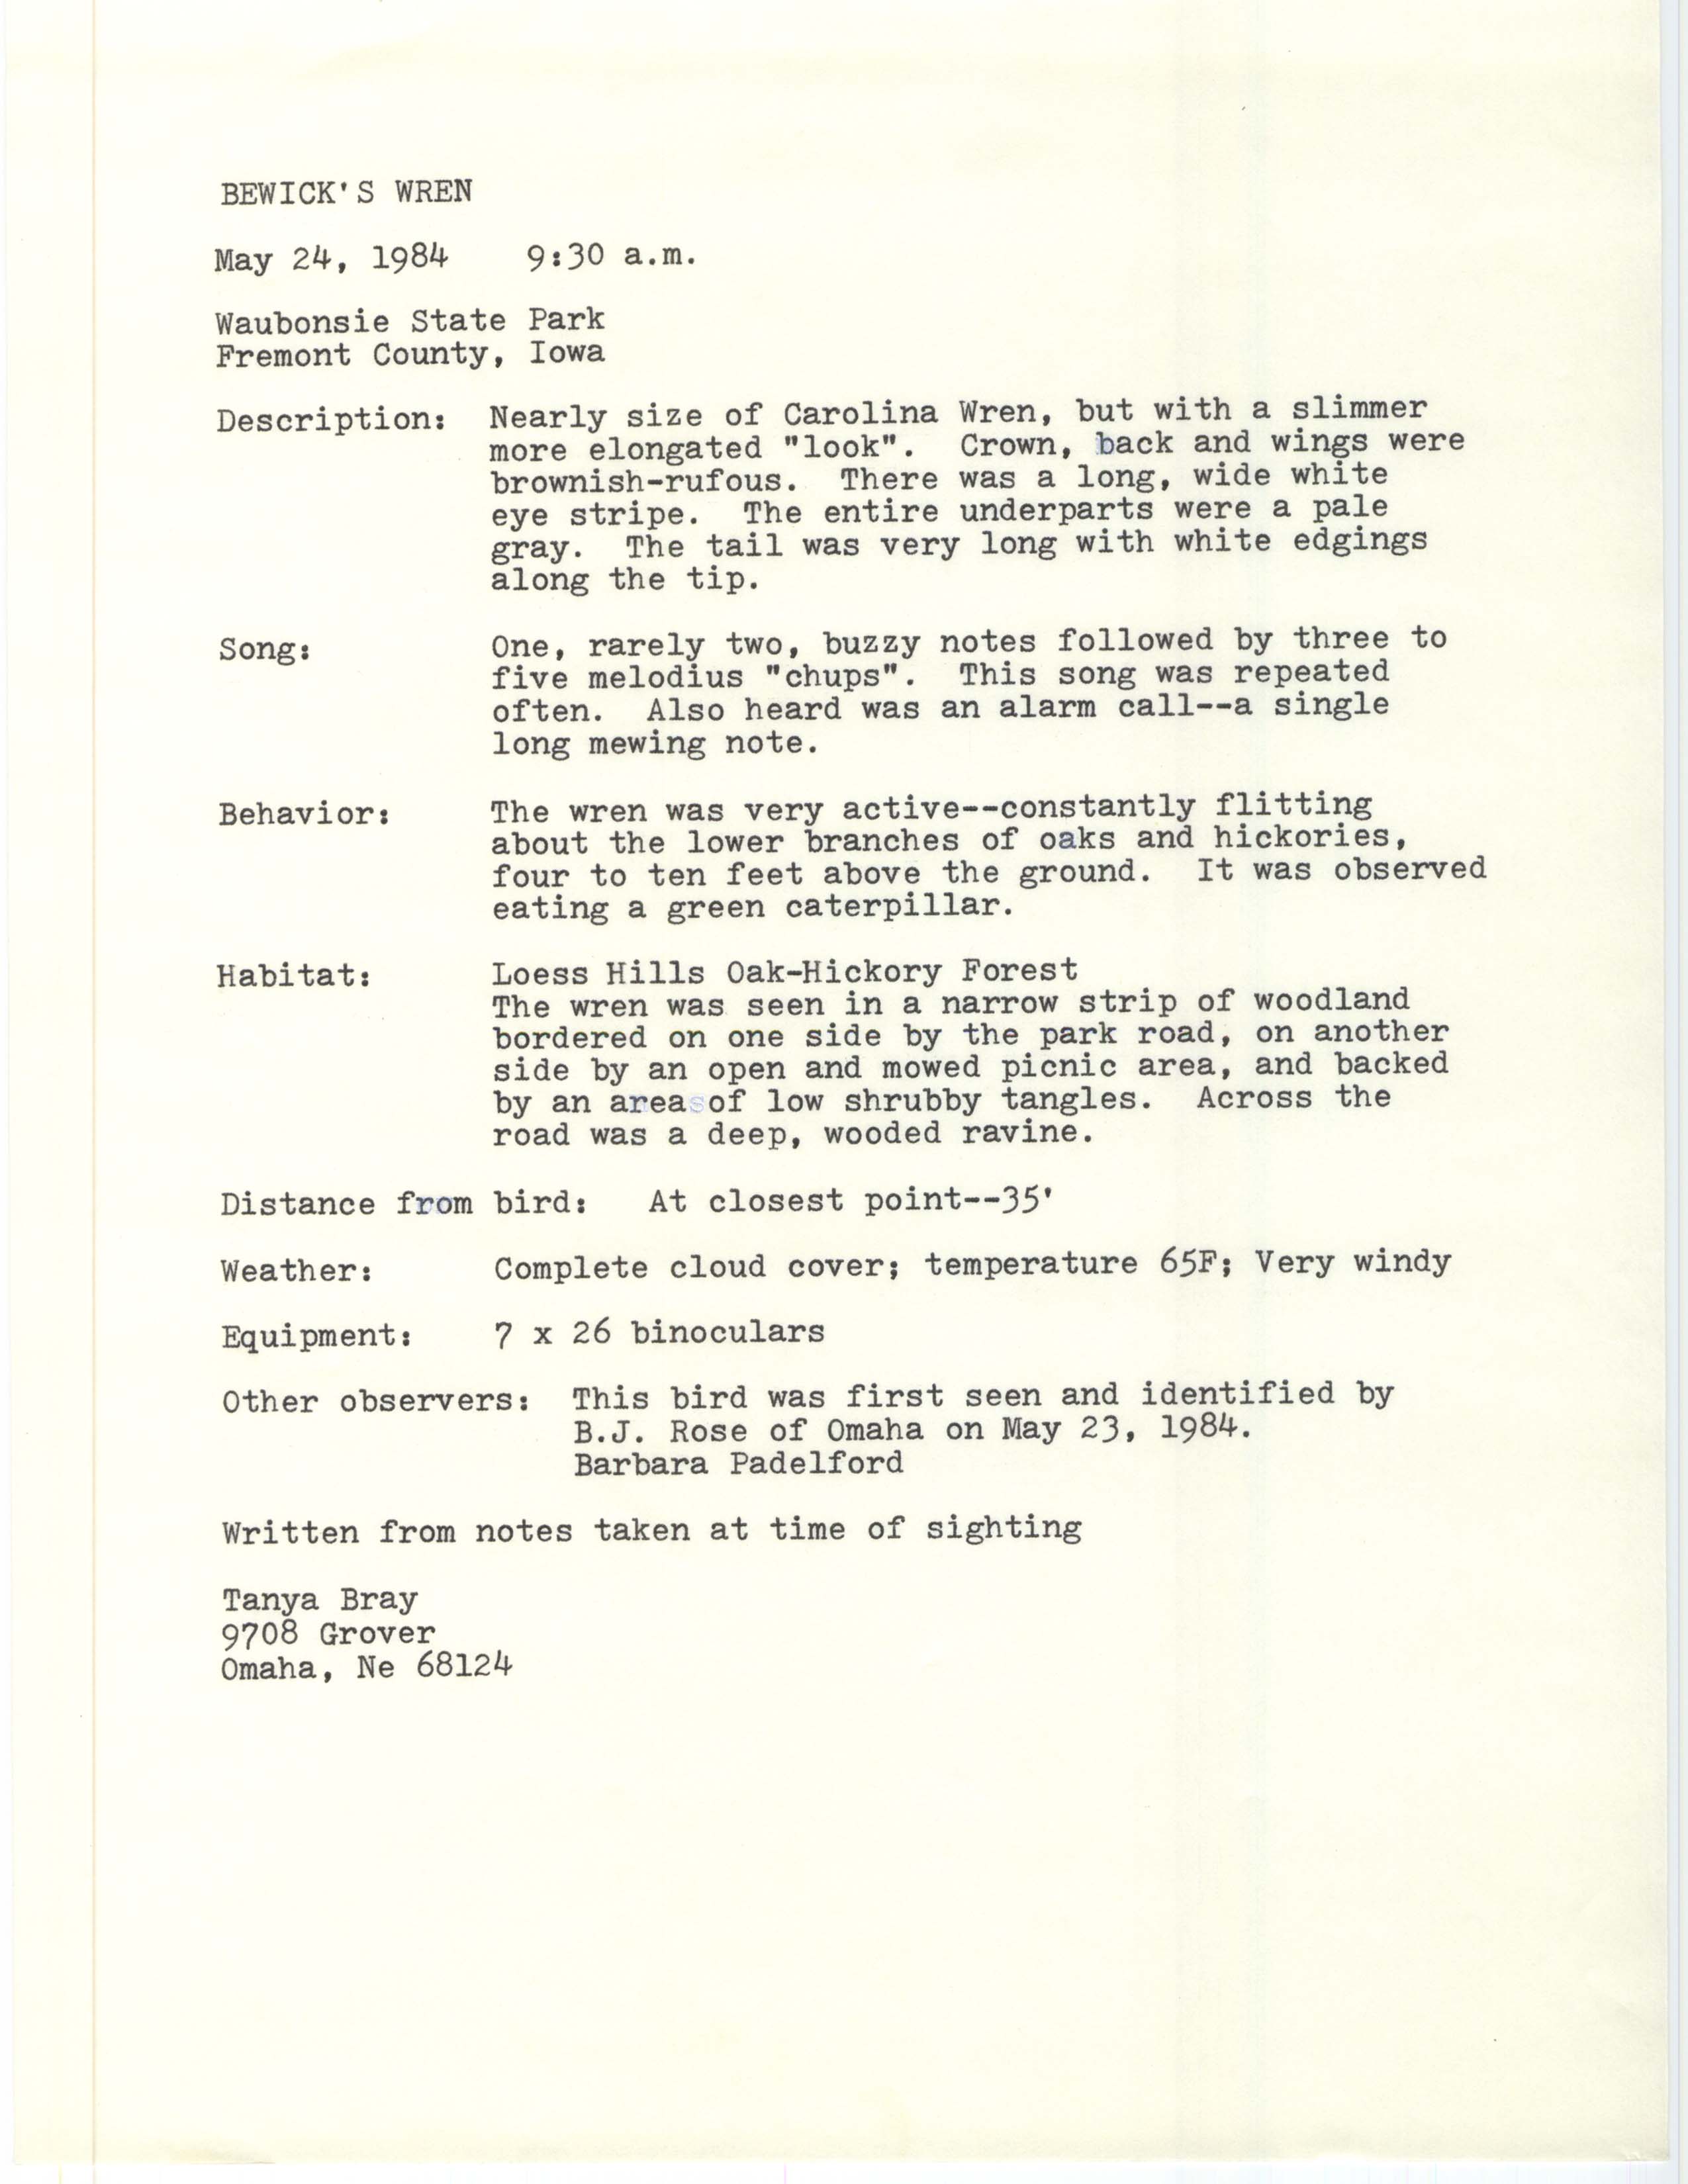 Rare bird documentation form for Bewick's Wren at Waubonsie State Park, 1984